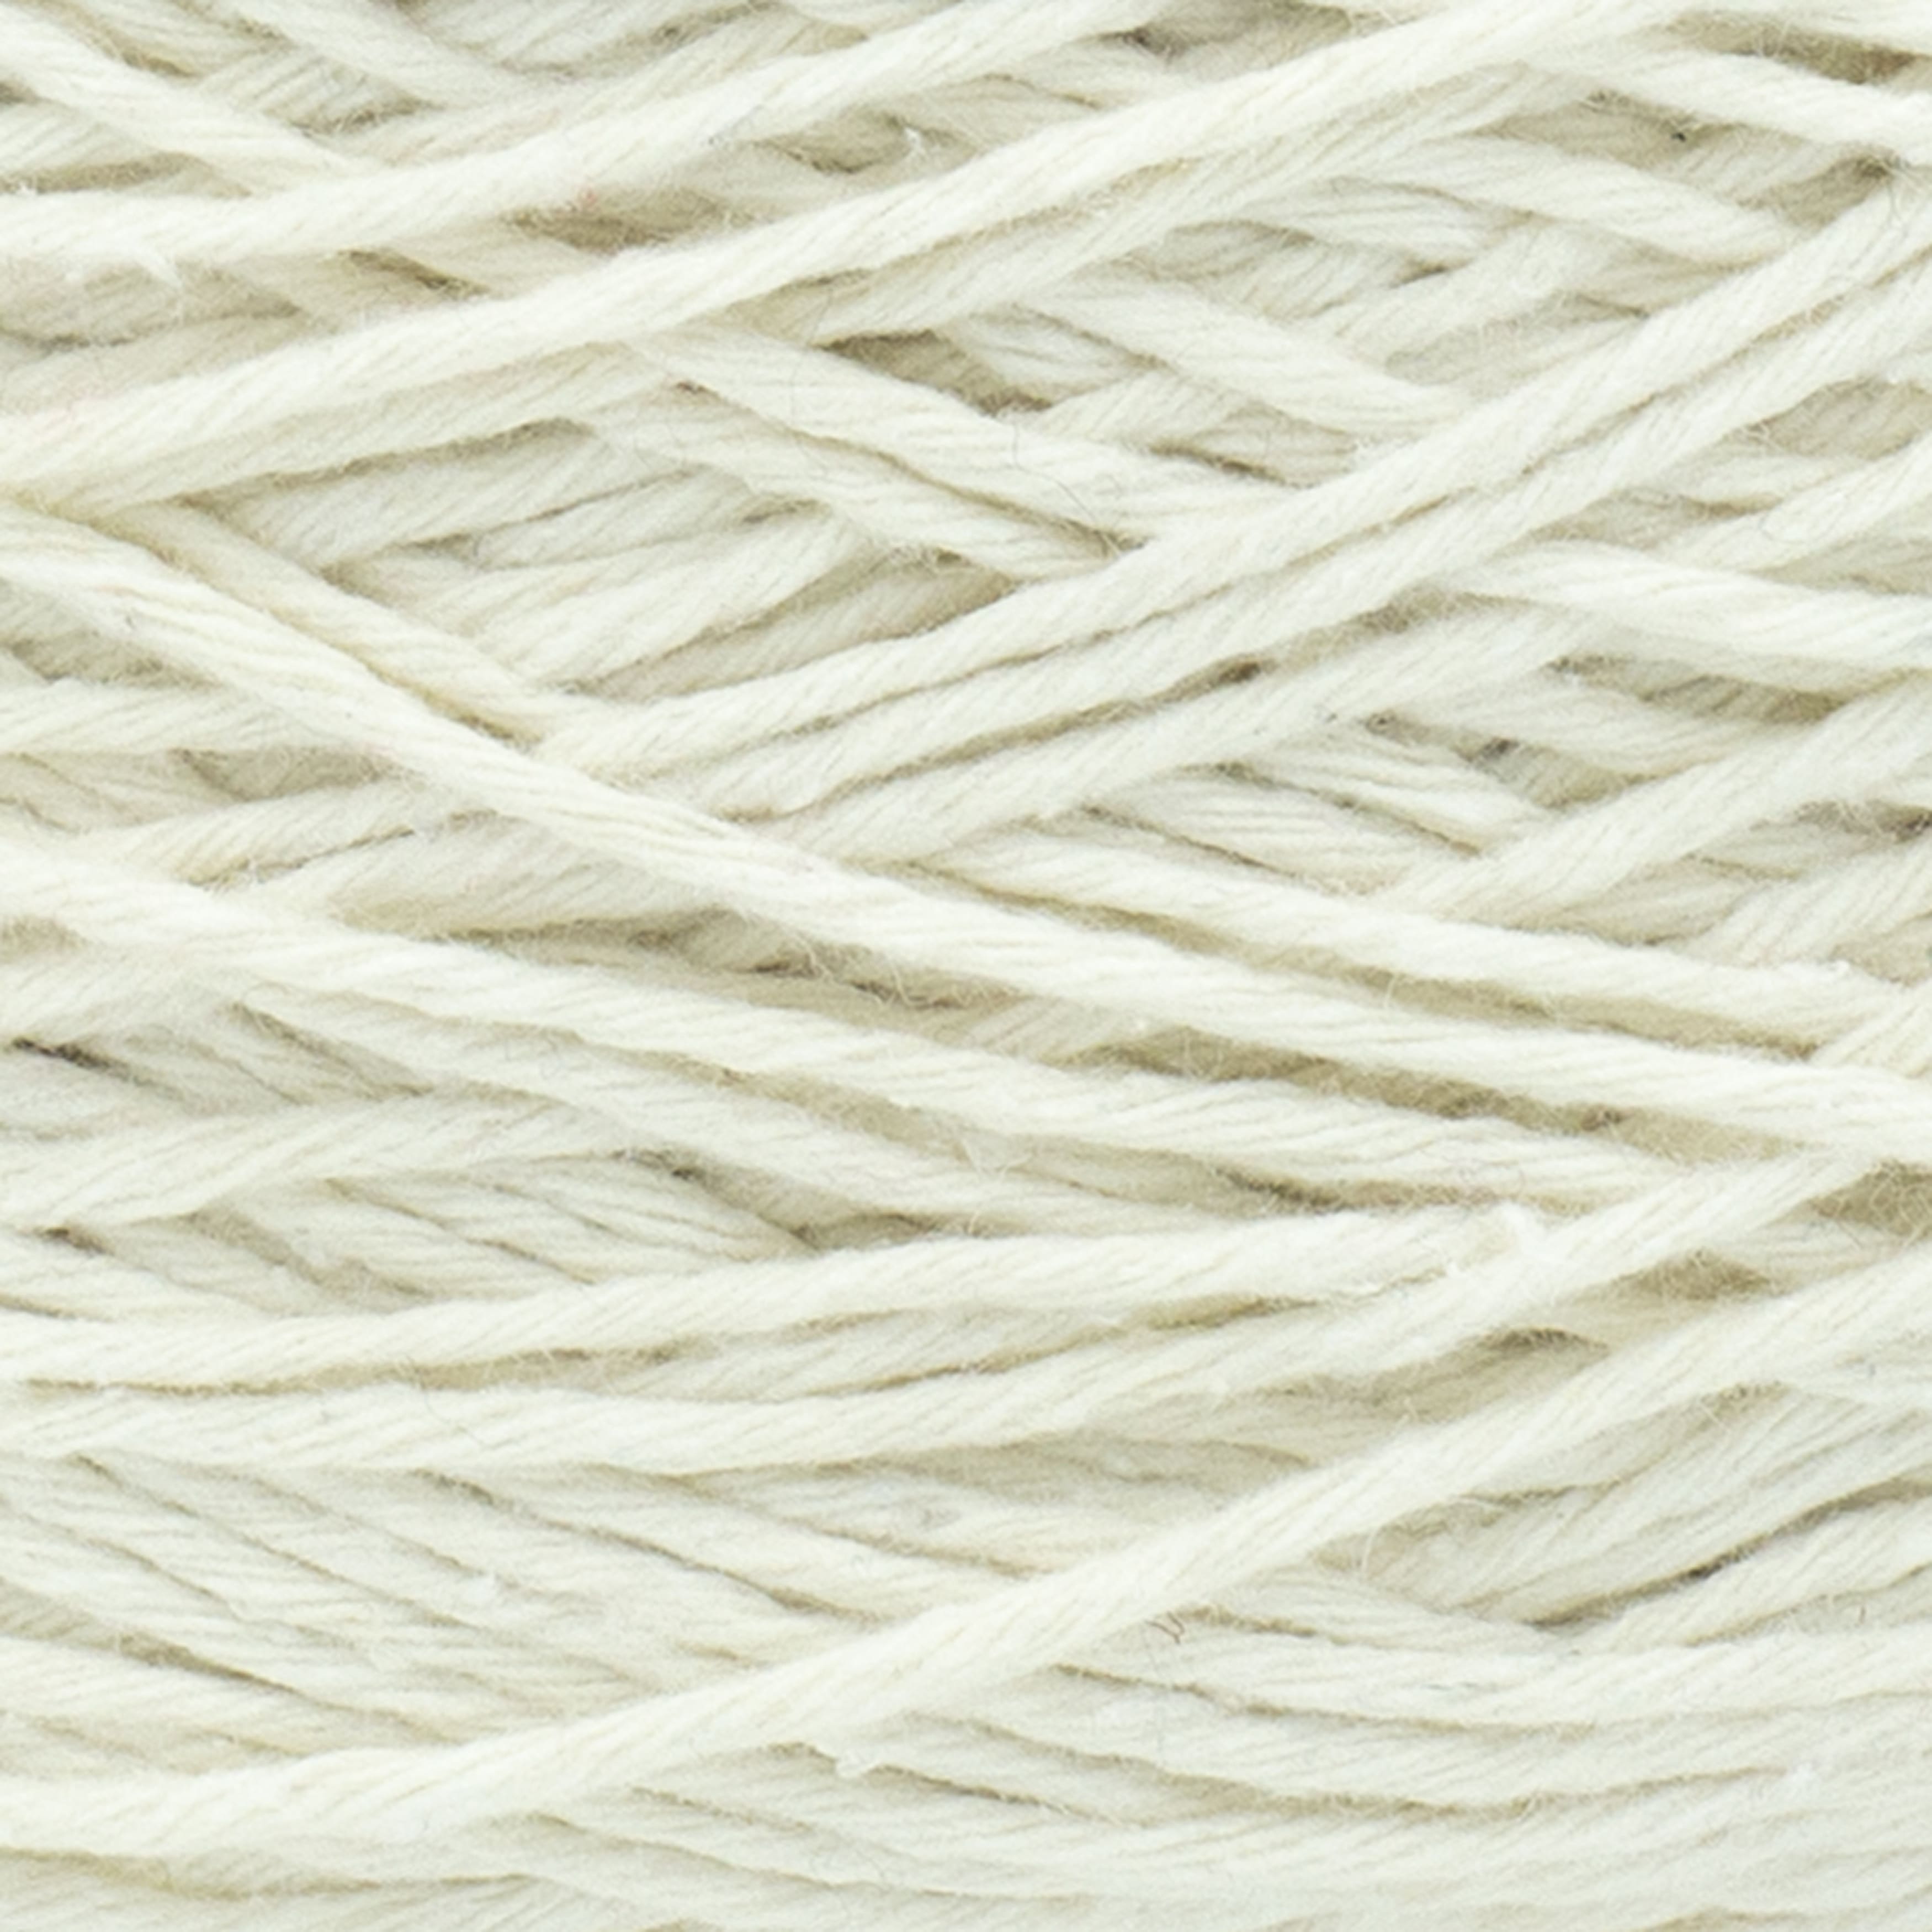 Re-Up Bonus Bundle Yarn – gather here online